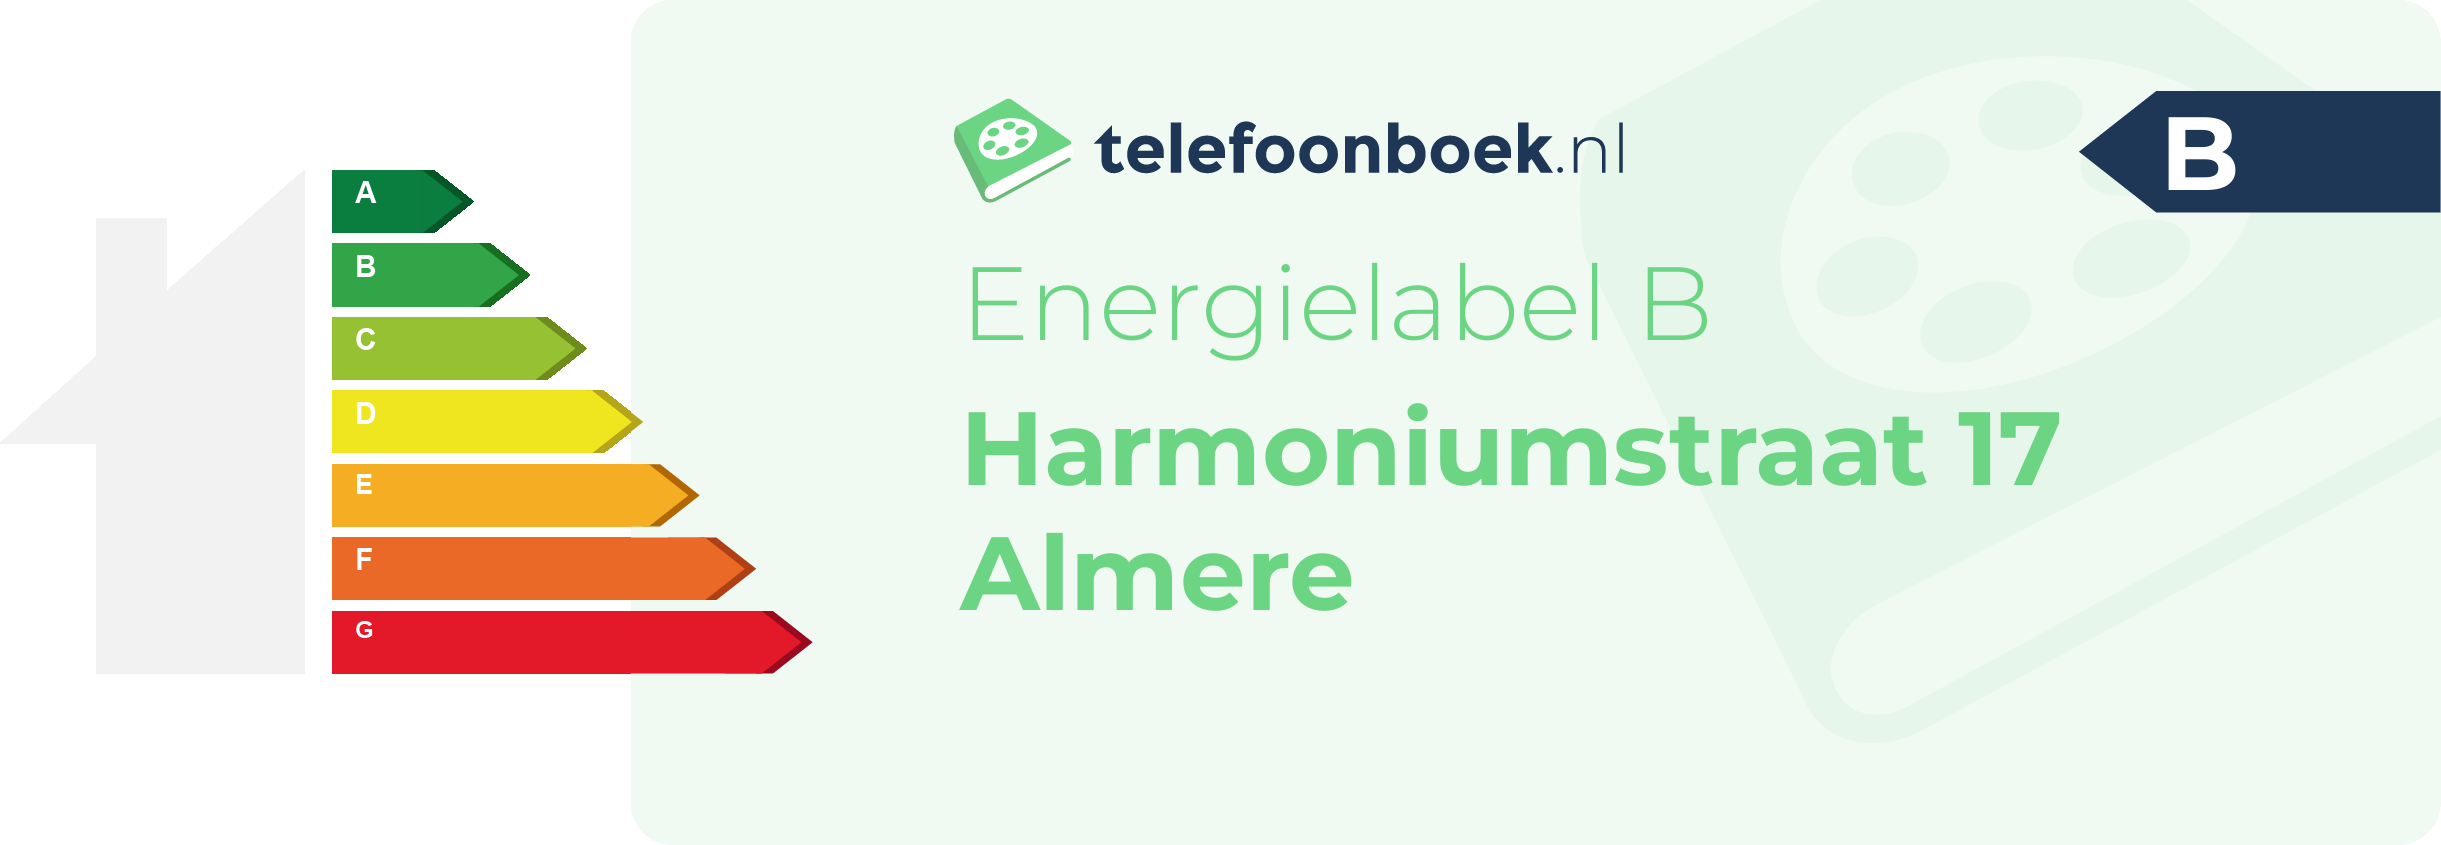 Energielabel Harmoniumstraat 17 Almere